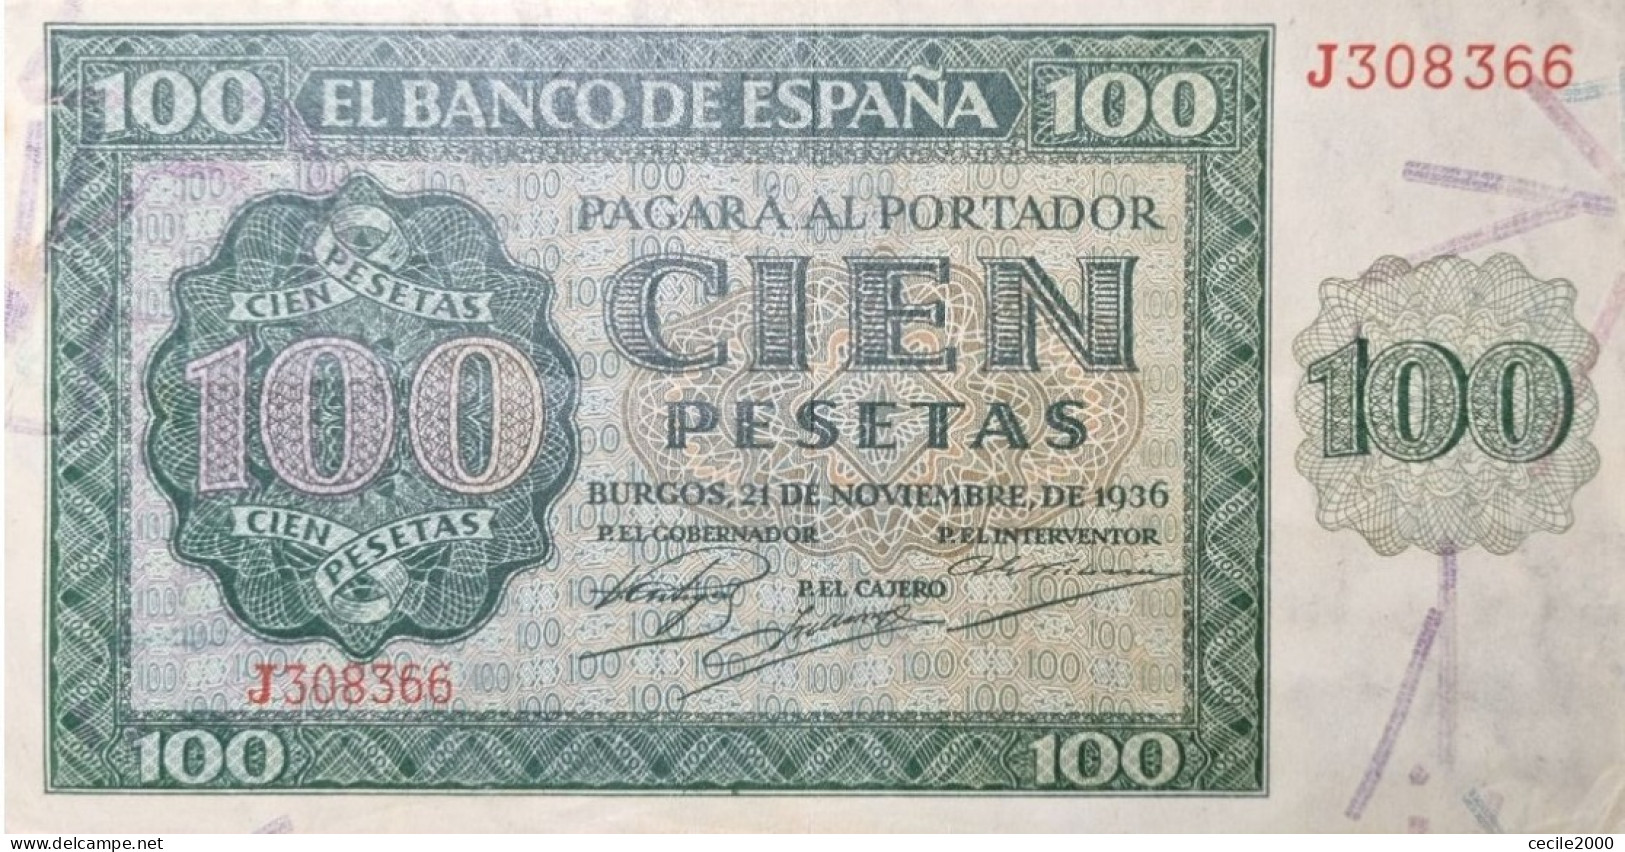 BILLET ESPAGNE SPAIN BANKNOTE 100 PESETAS 1936 AUNC BILLETE ESPAÑA EBC *COMPRAS MULTIPLES CONSULTAR* - 100 Pesetas